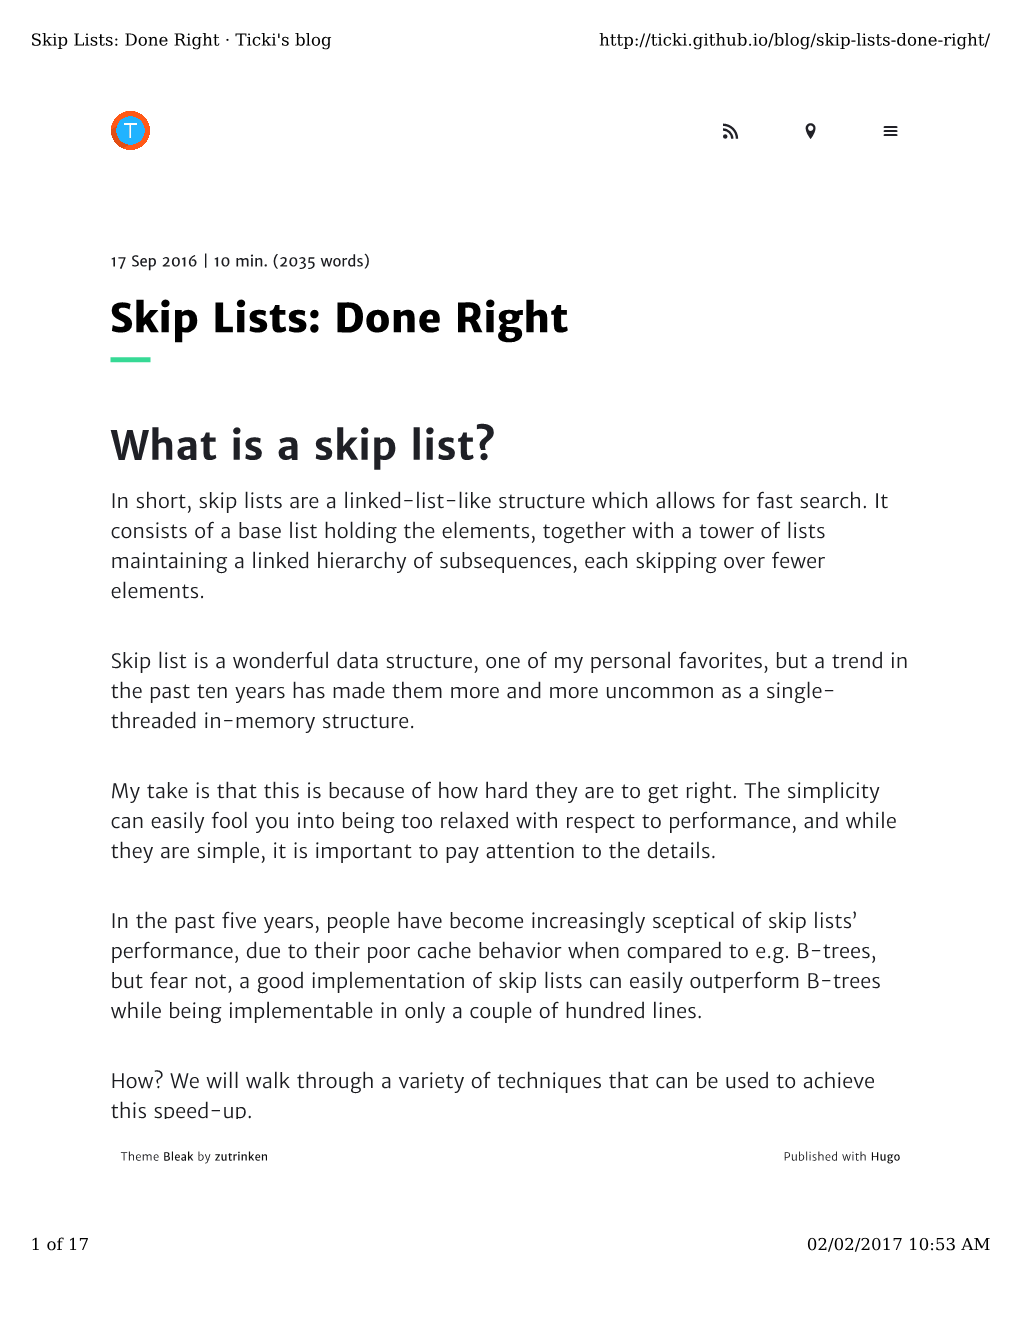 Skip Lists: Done Right · Ticki's Blog